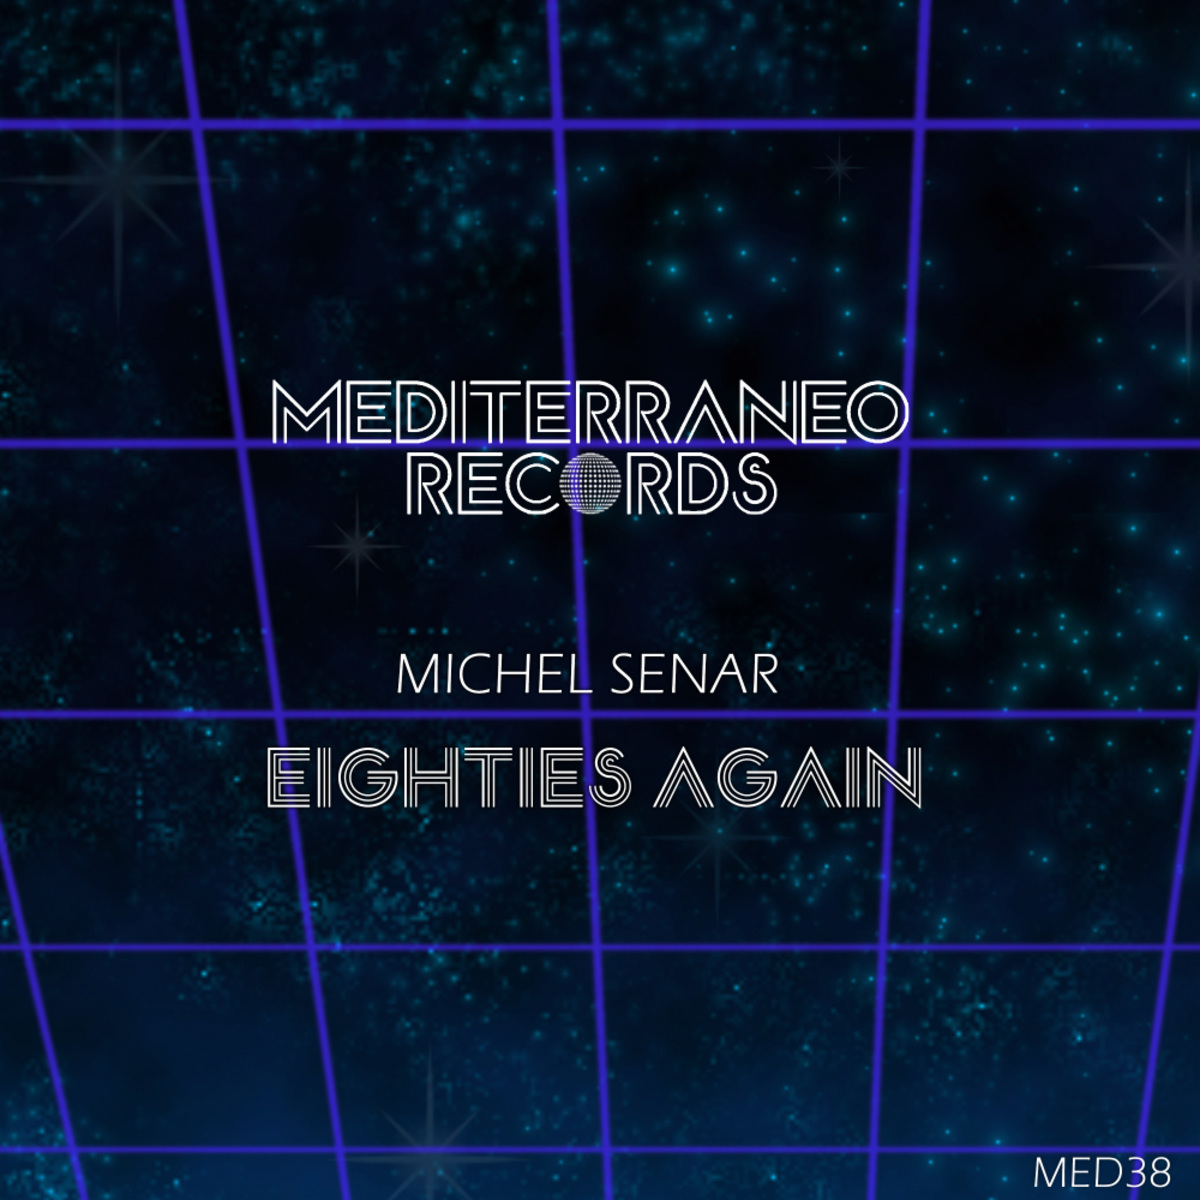 Michel Senar - Eighties Again / Mediterraneo Records